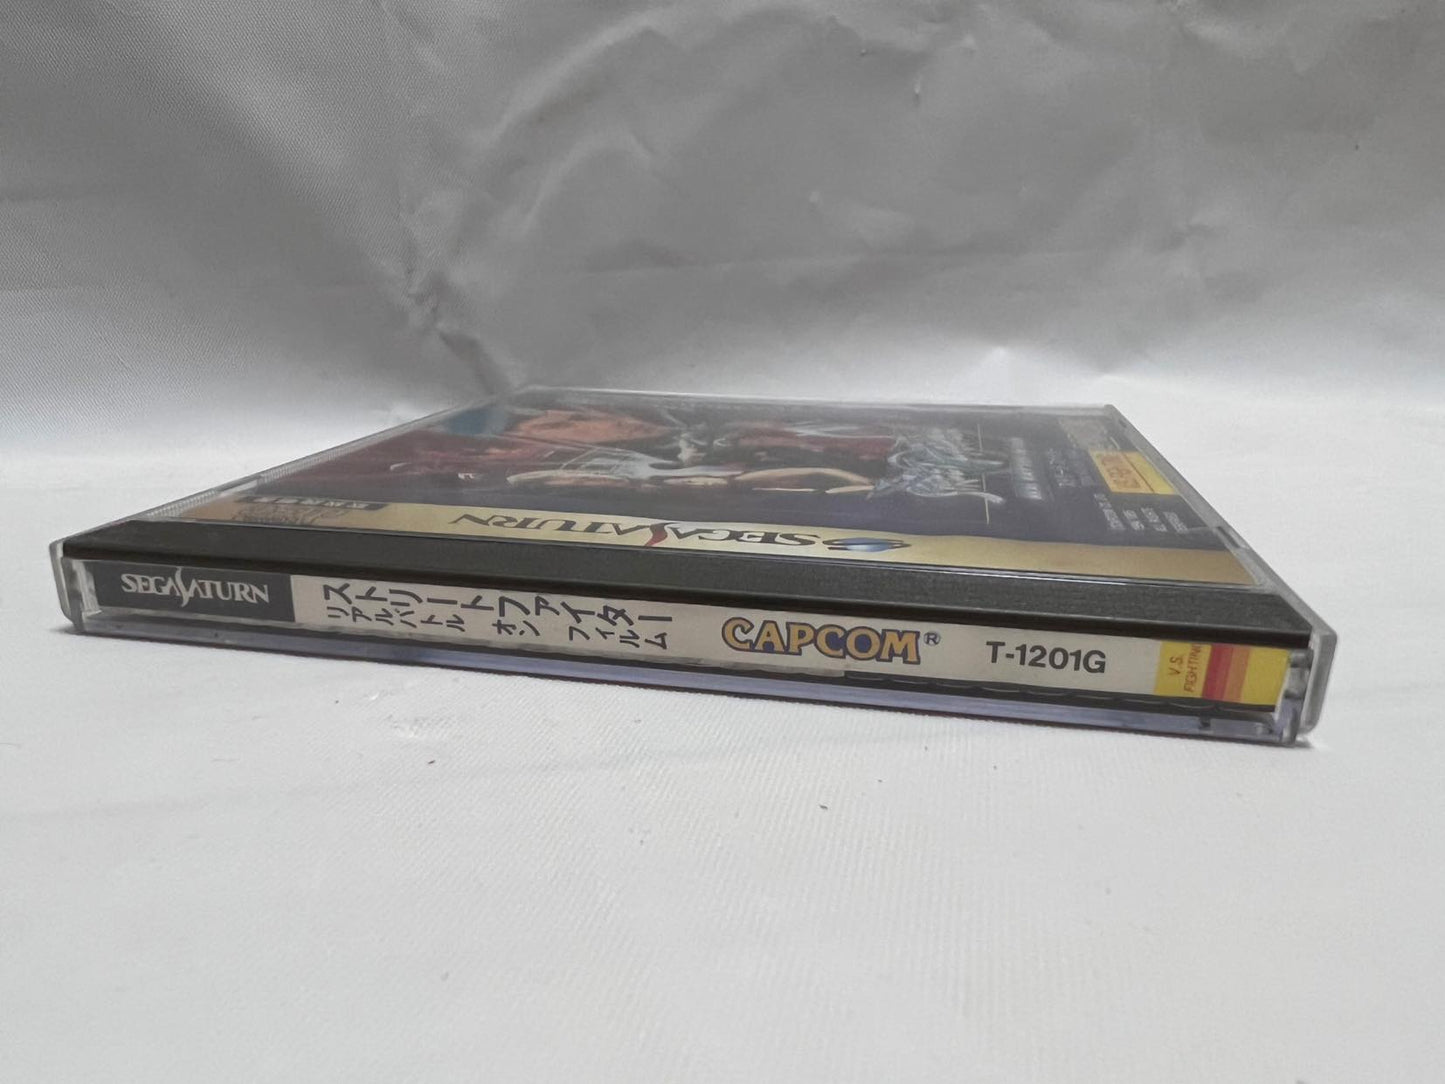 Whole sale Street Fighter Series SEGA Saturn Games set, Collection, ZERO-f1006-